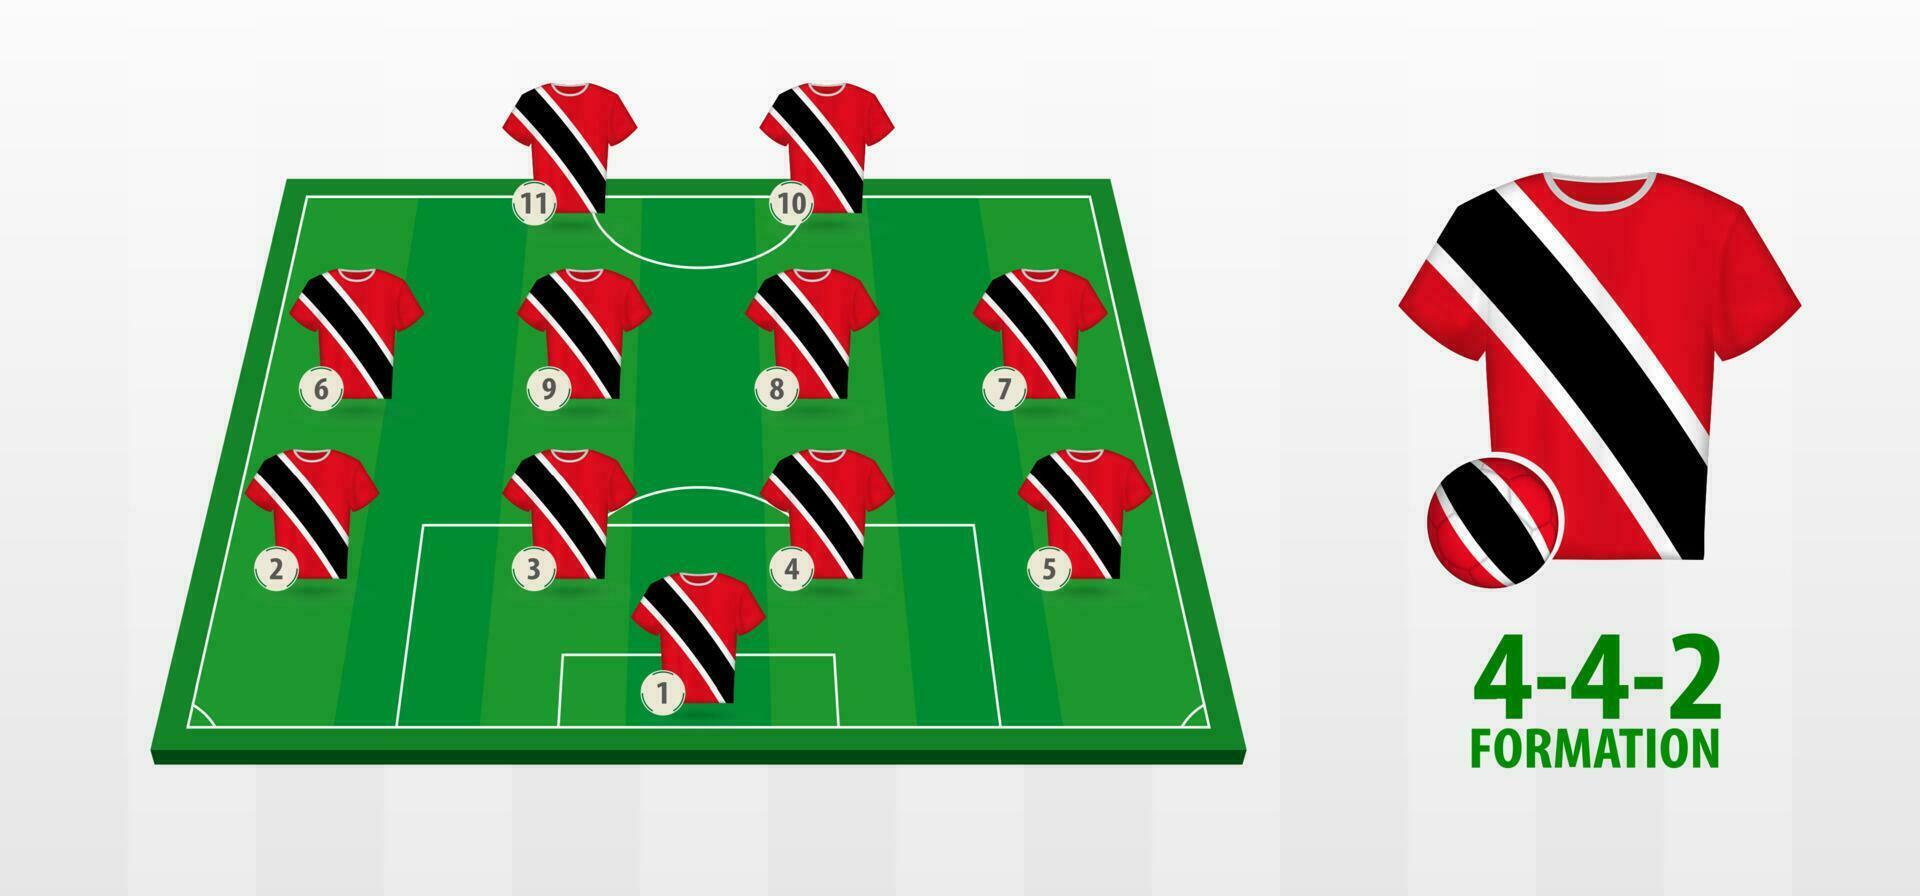 Trinidad and Tobago National Football Team Formation on Football Field. vector